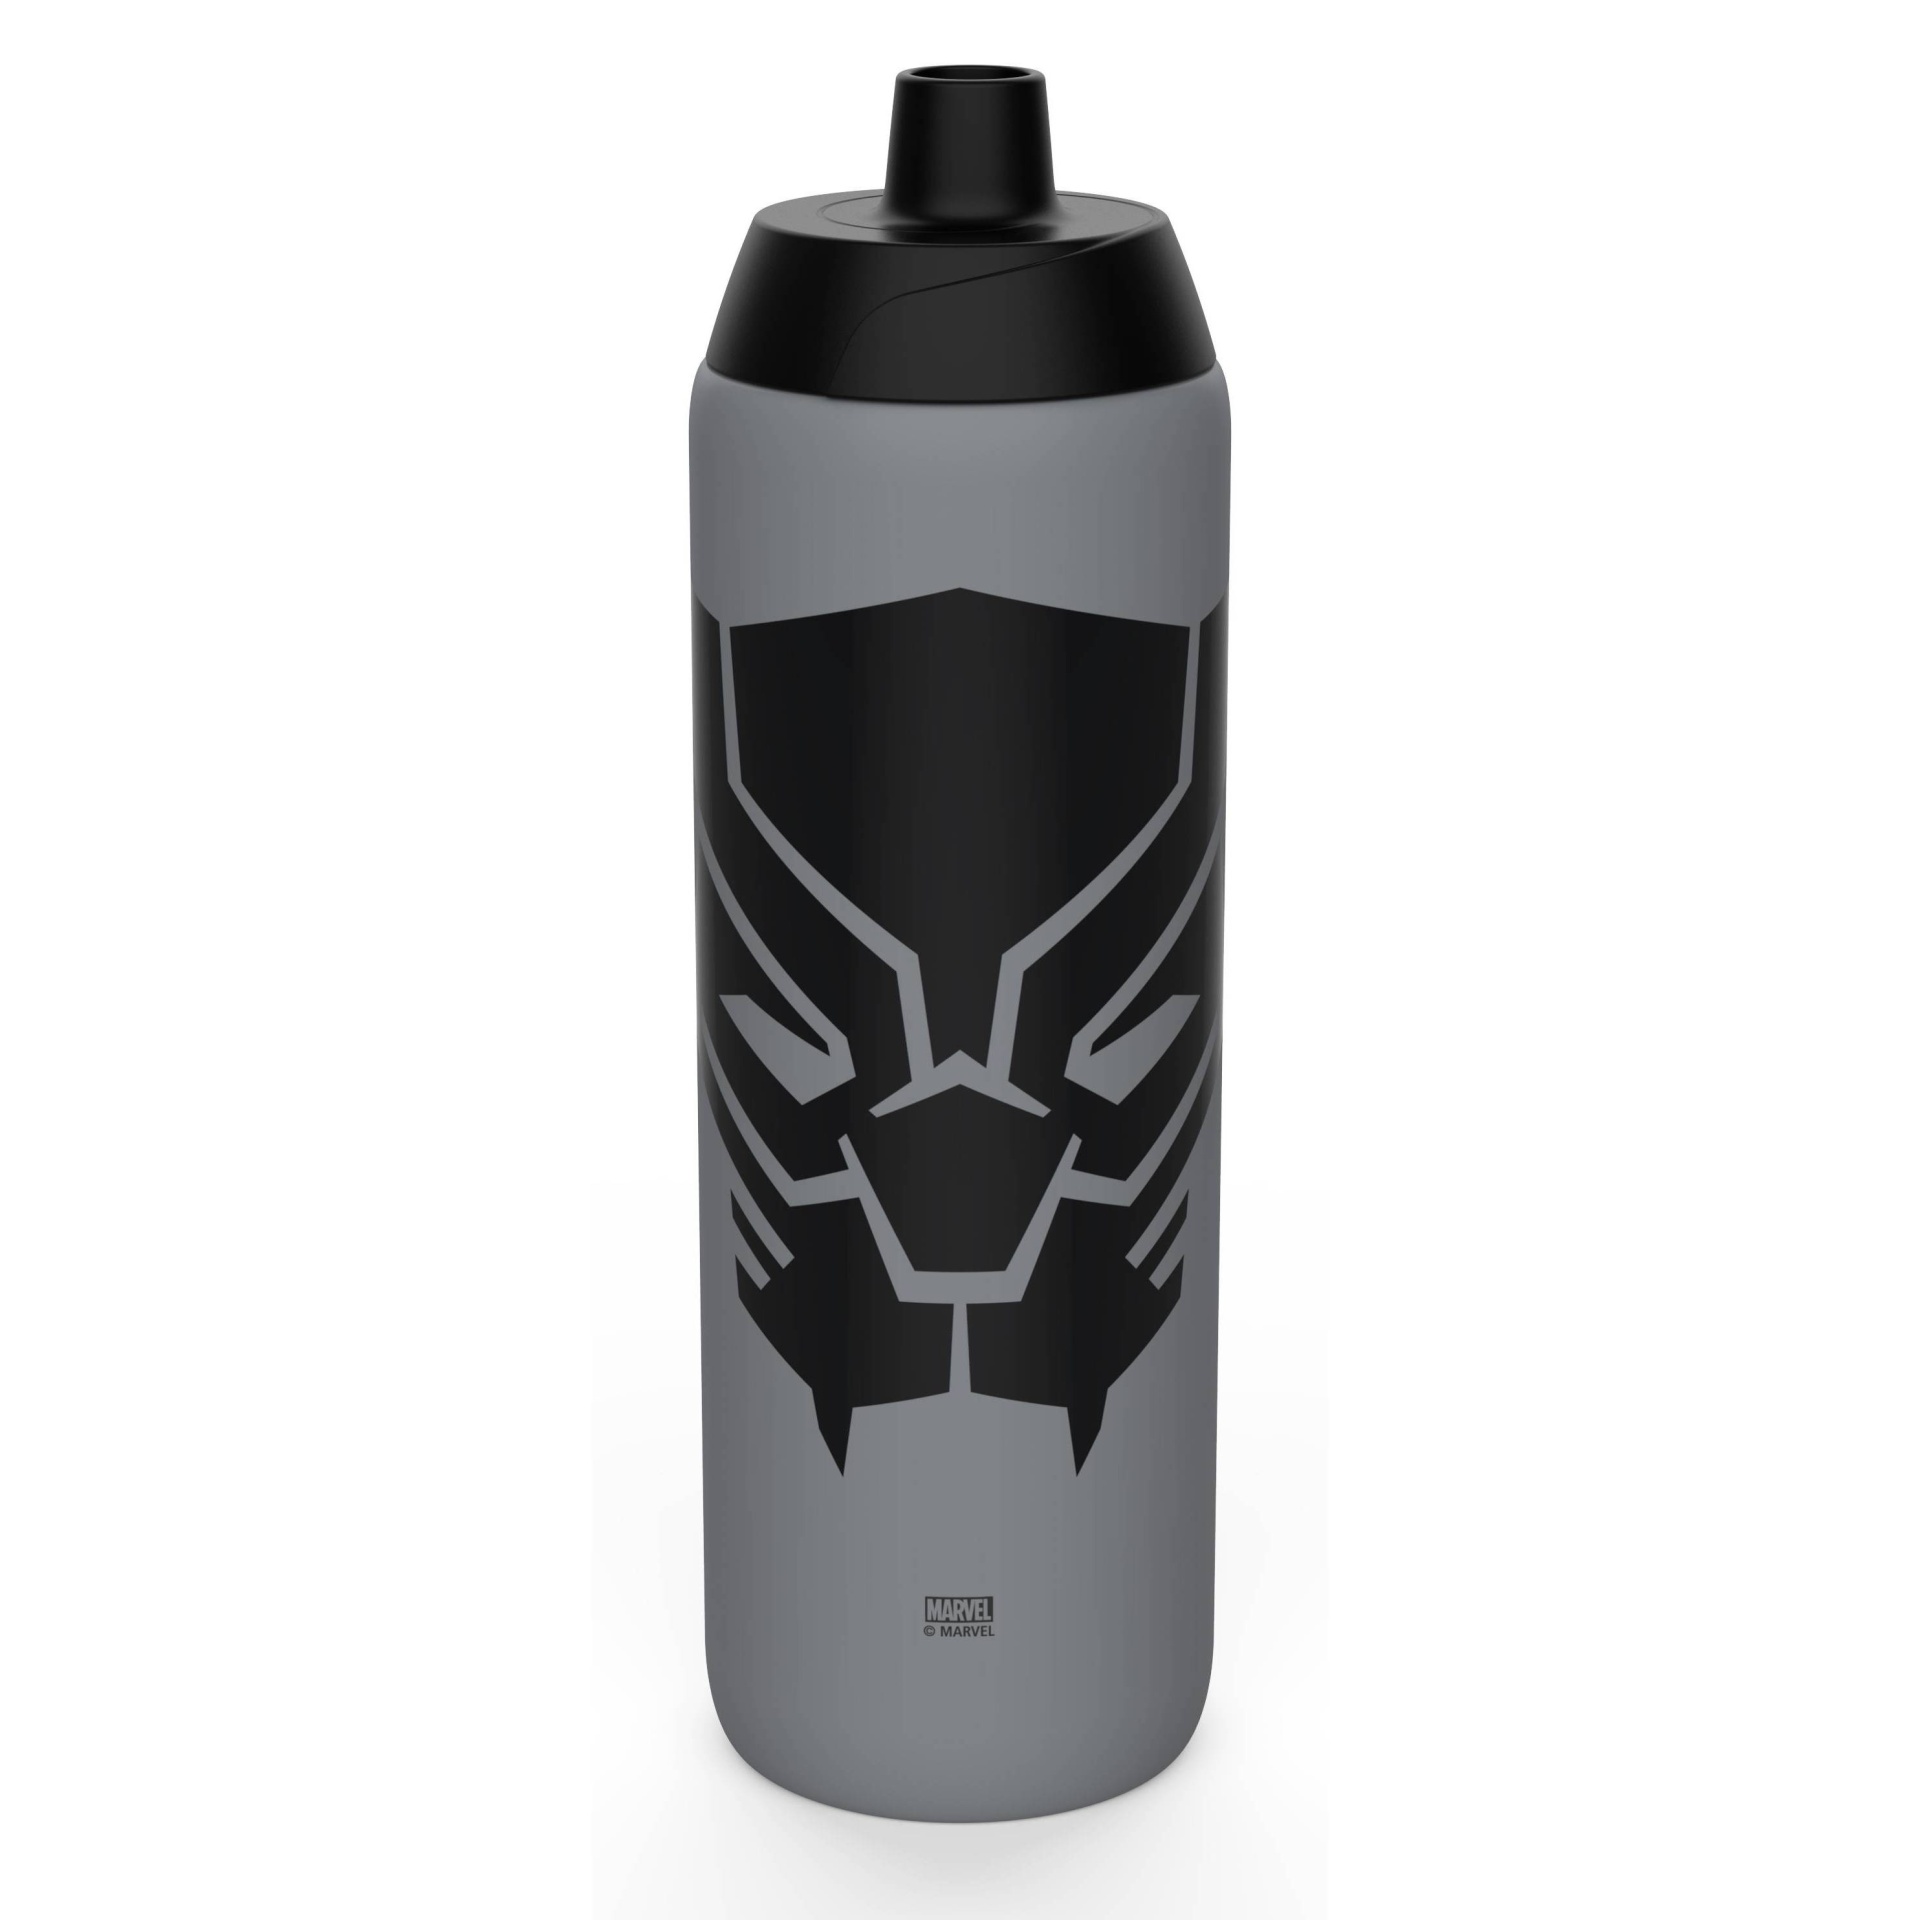 Zak Designs Zak! Designs Squeeze Bottle - Black Panther 24.5 oz